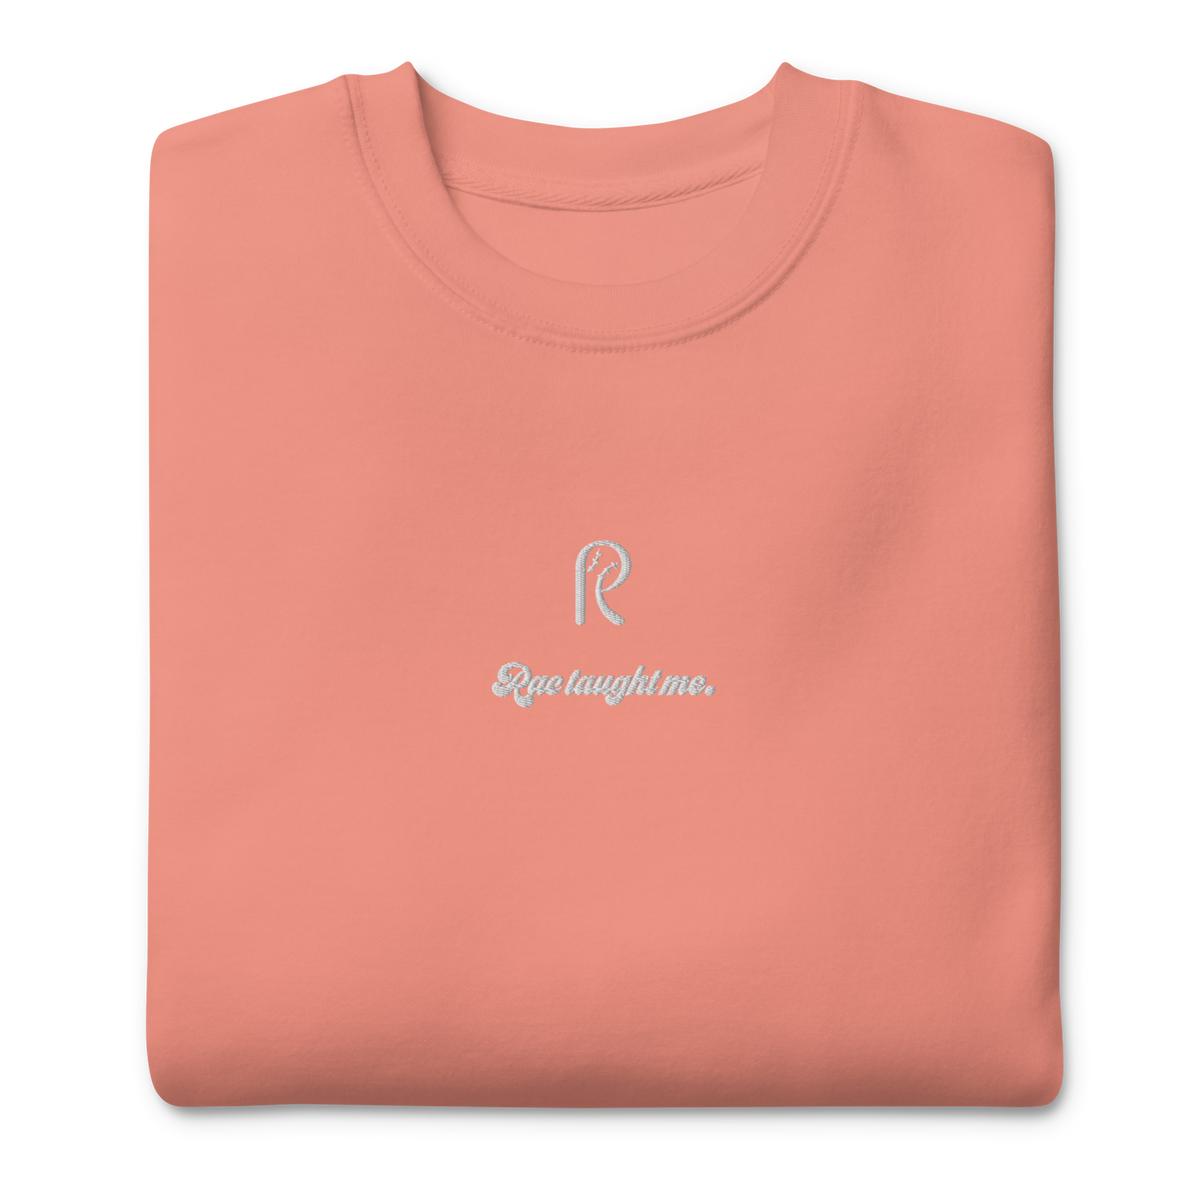 Embroidered RAC Taught Me Sweatshirt (Premium)